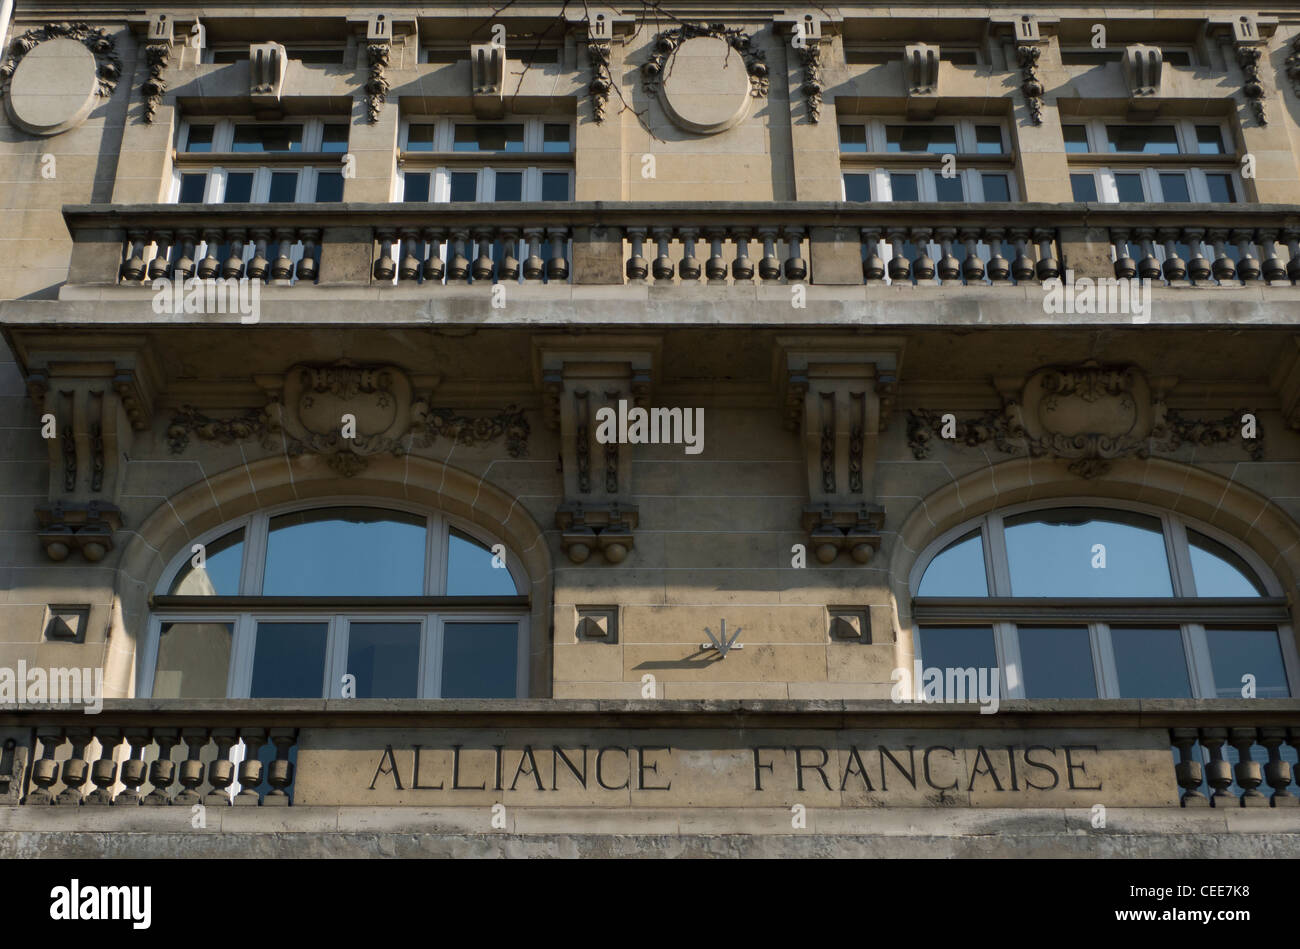 Alliance francaise building in Boulevard Raspail, Paris, France Stock ...